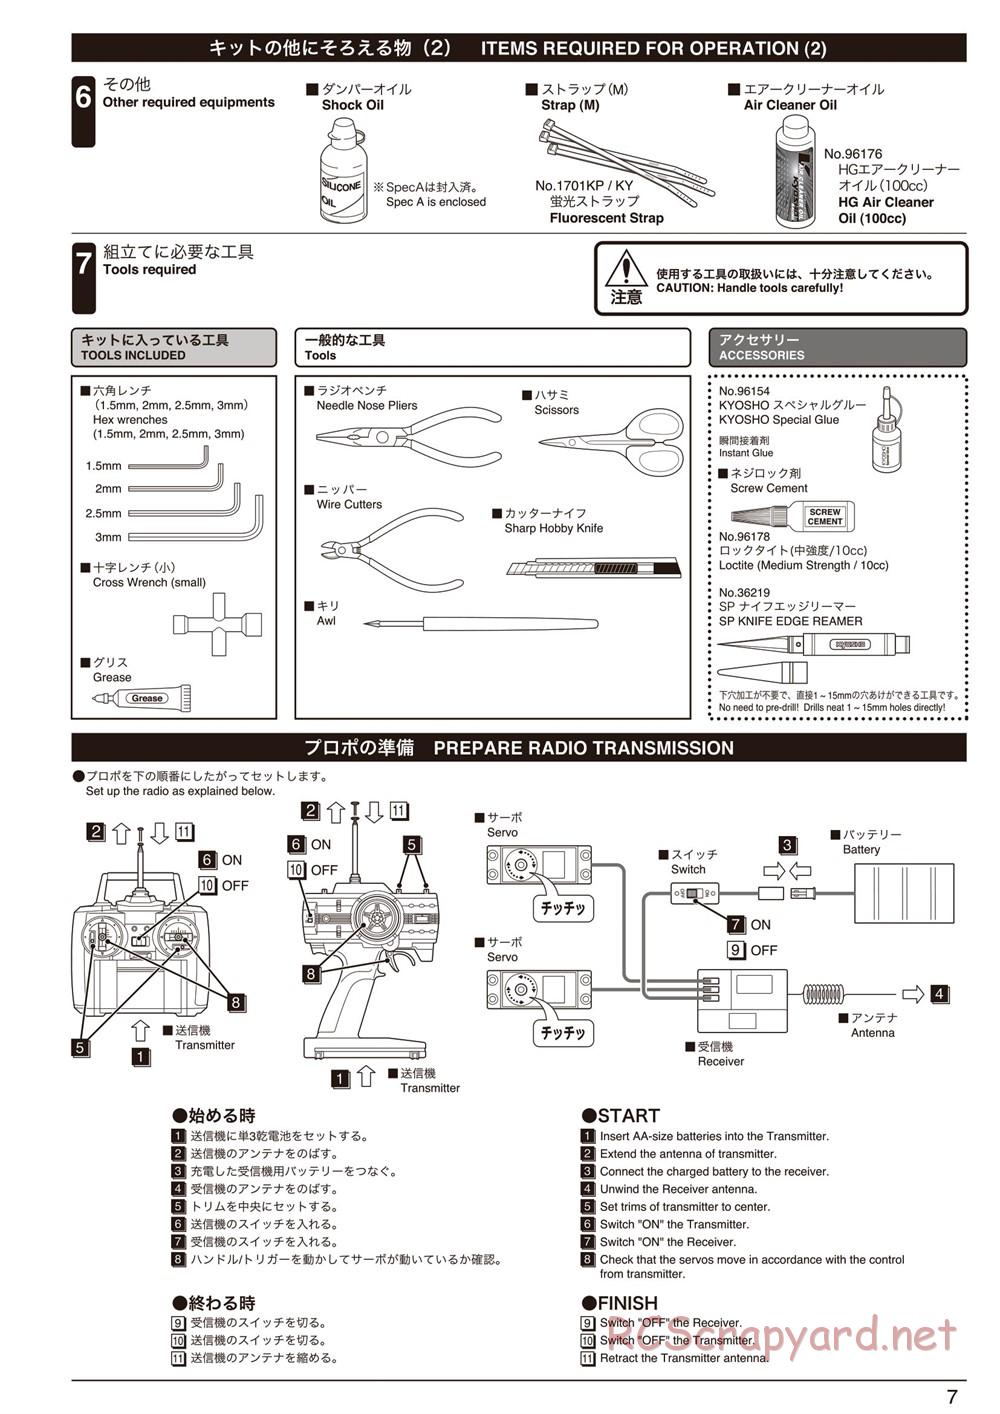 Kyosho - Inferno MP9 TKI2 - Manual - Page 7